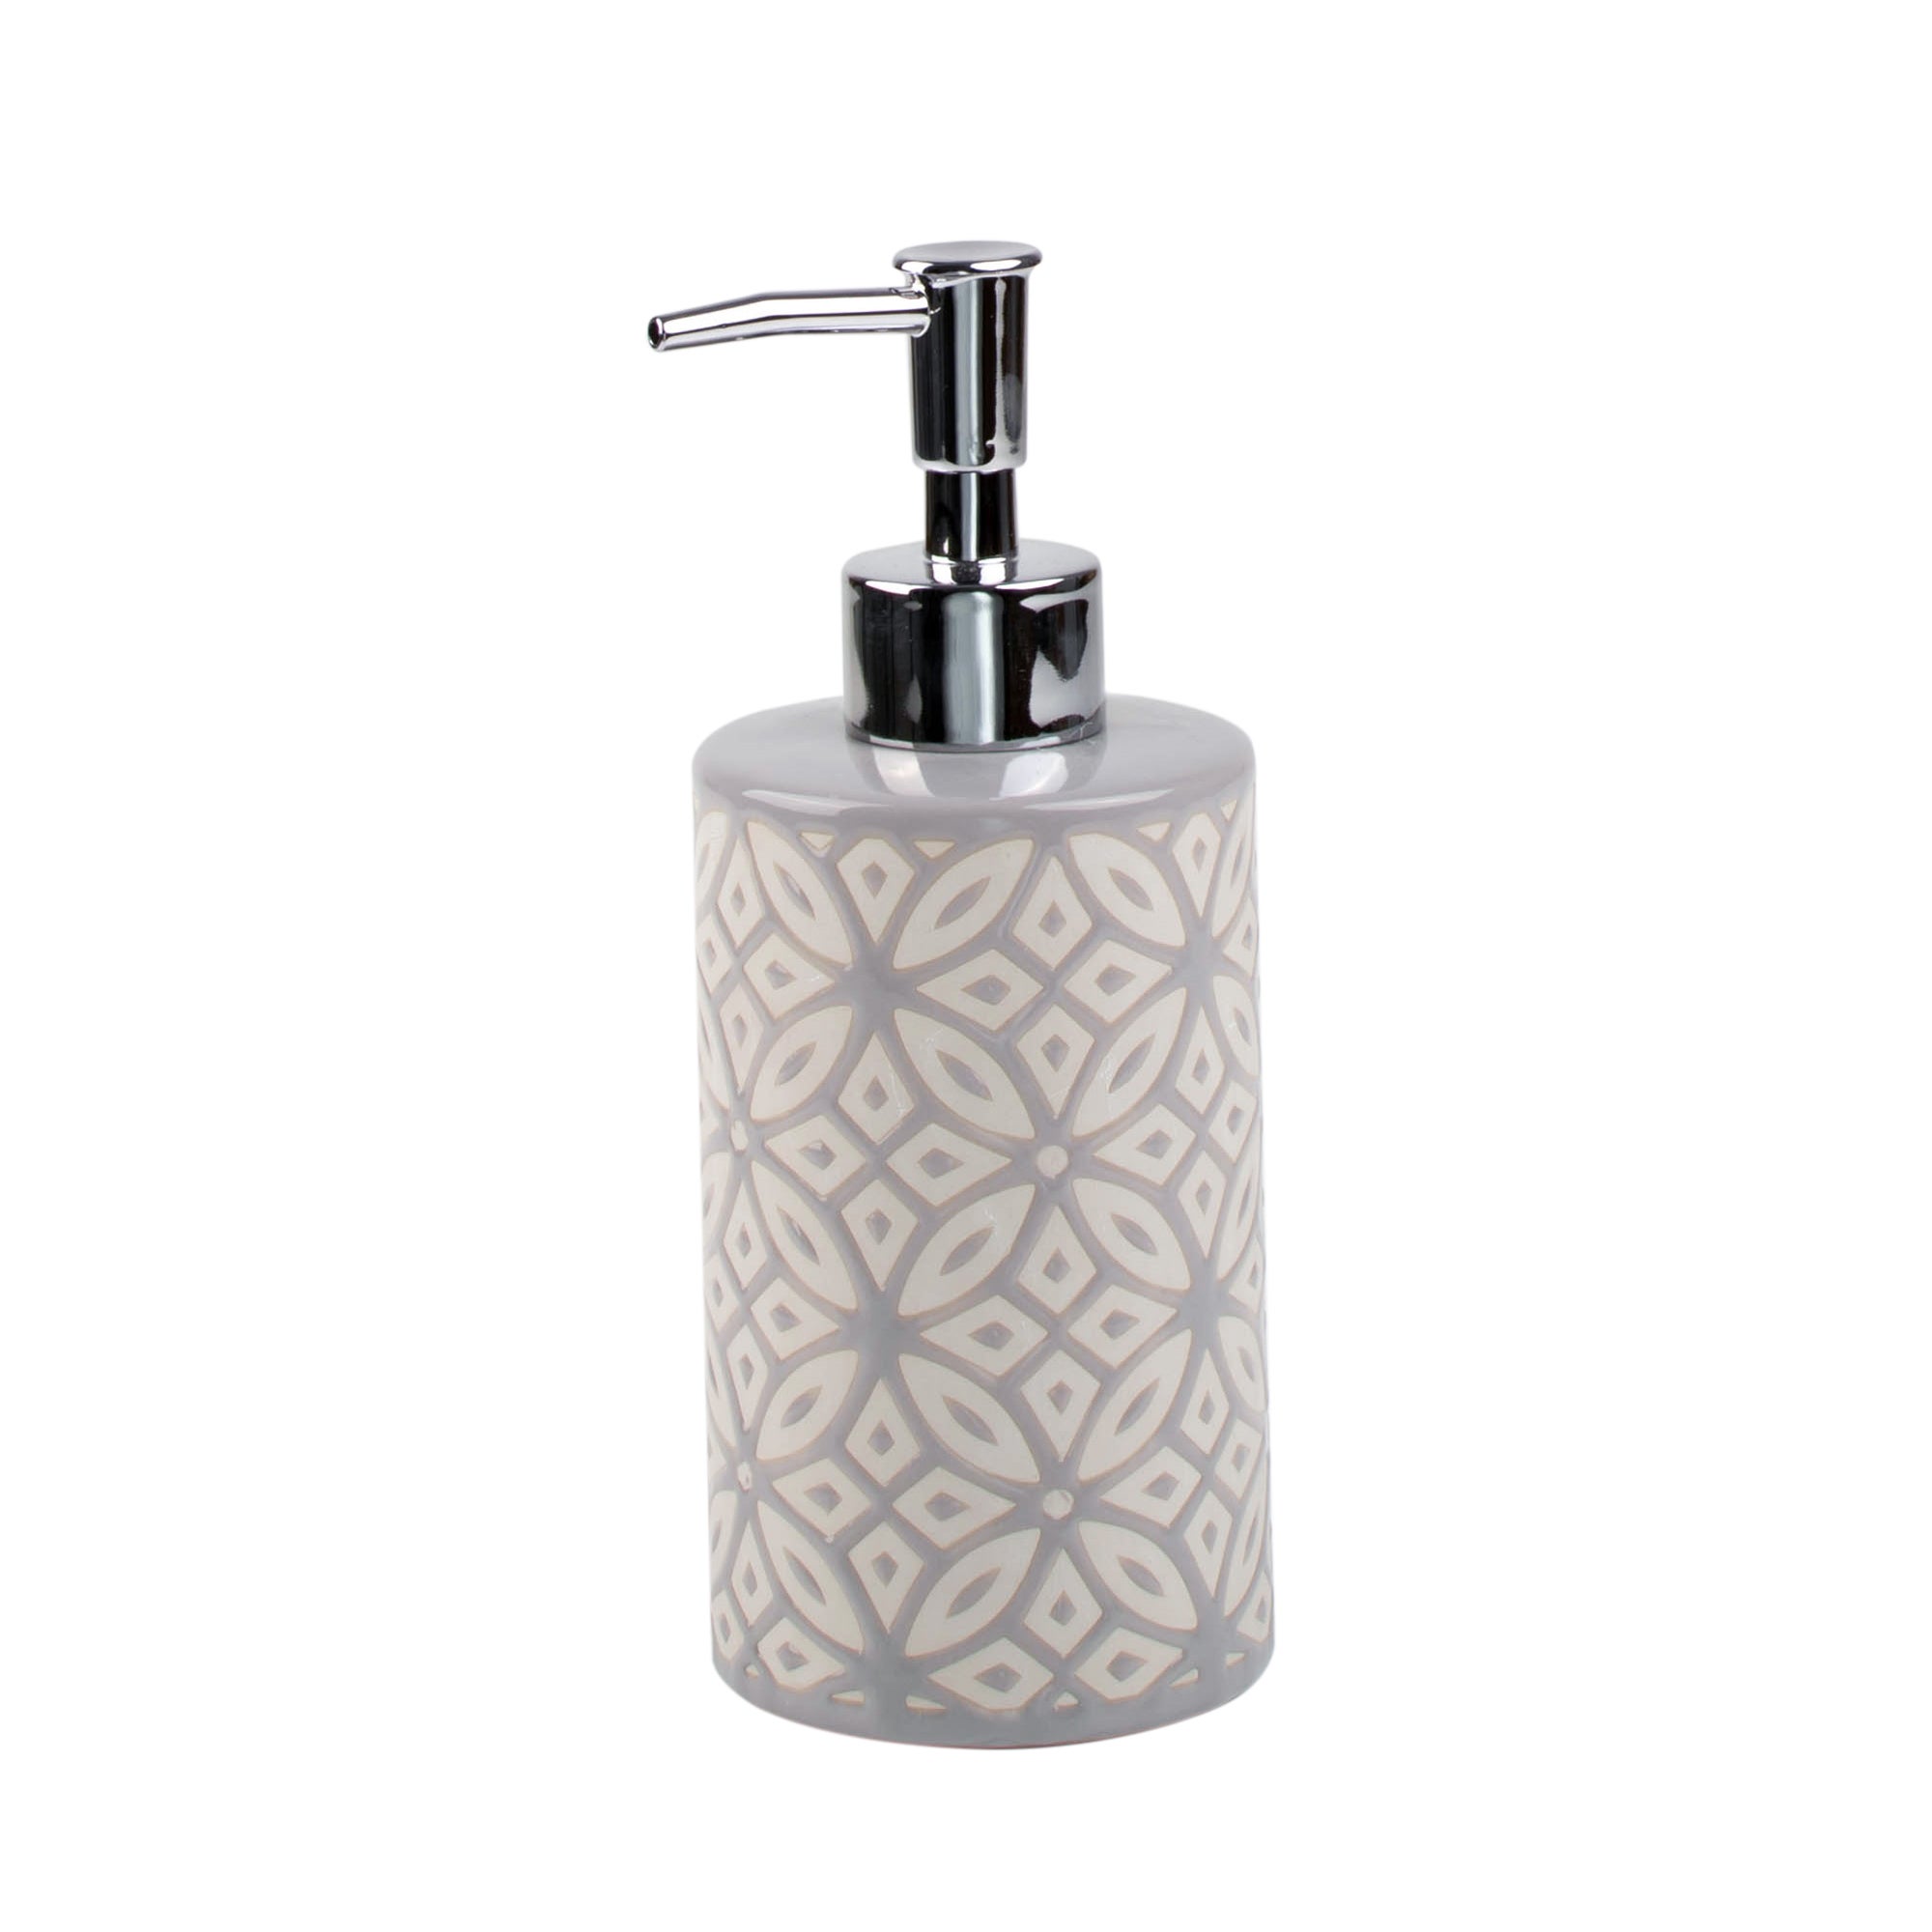 Geo Tile Grey Ceramic Soap Dispenser